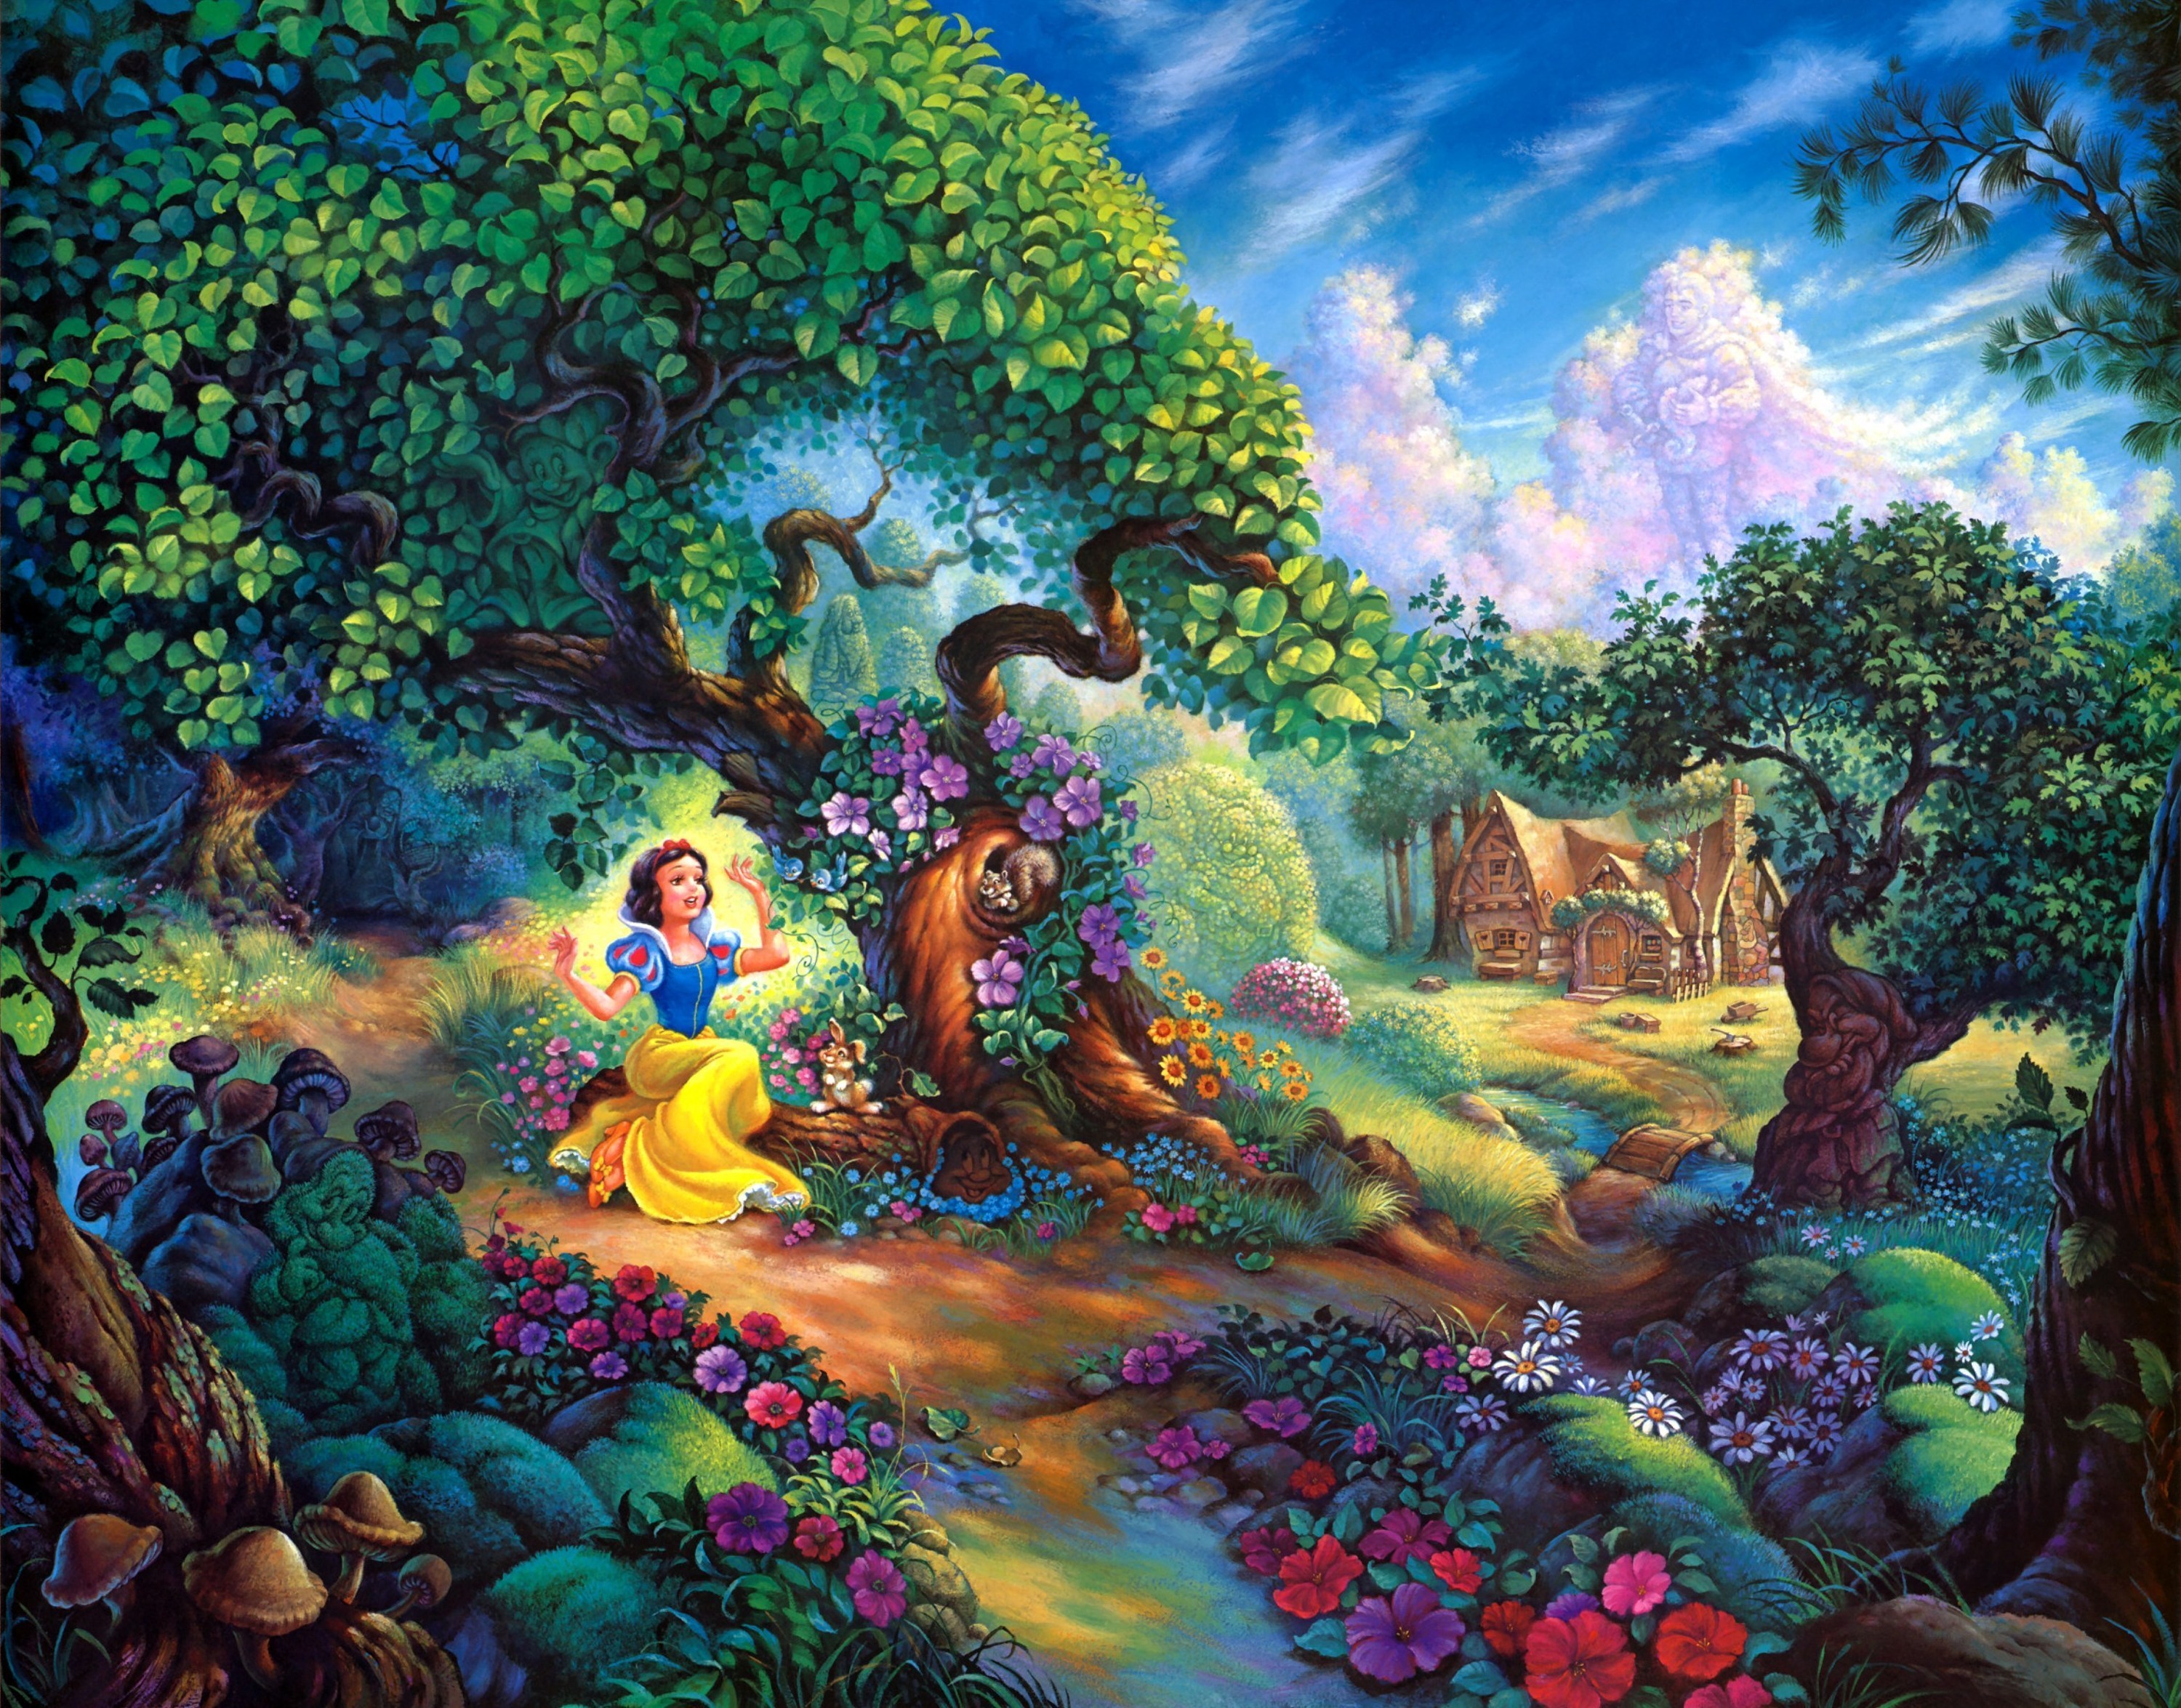 Movie Snow White HD Wallpaper by Tom duBois